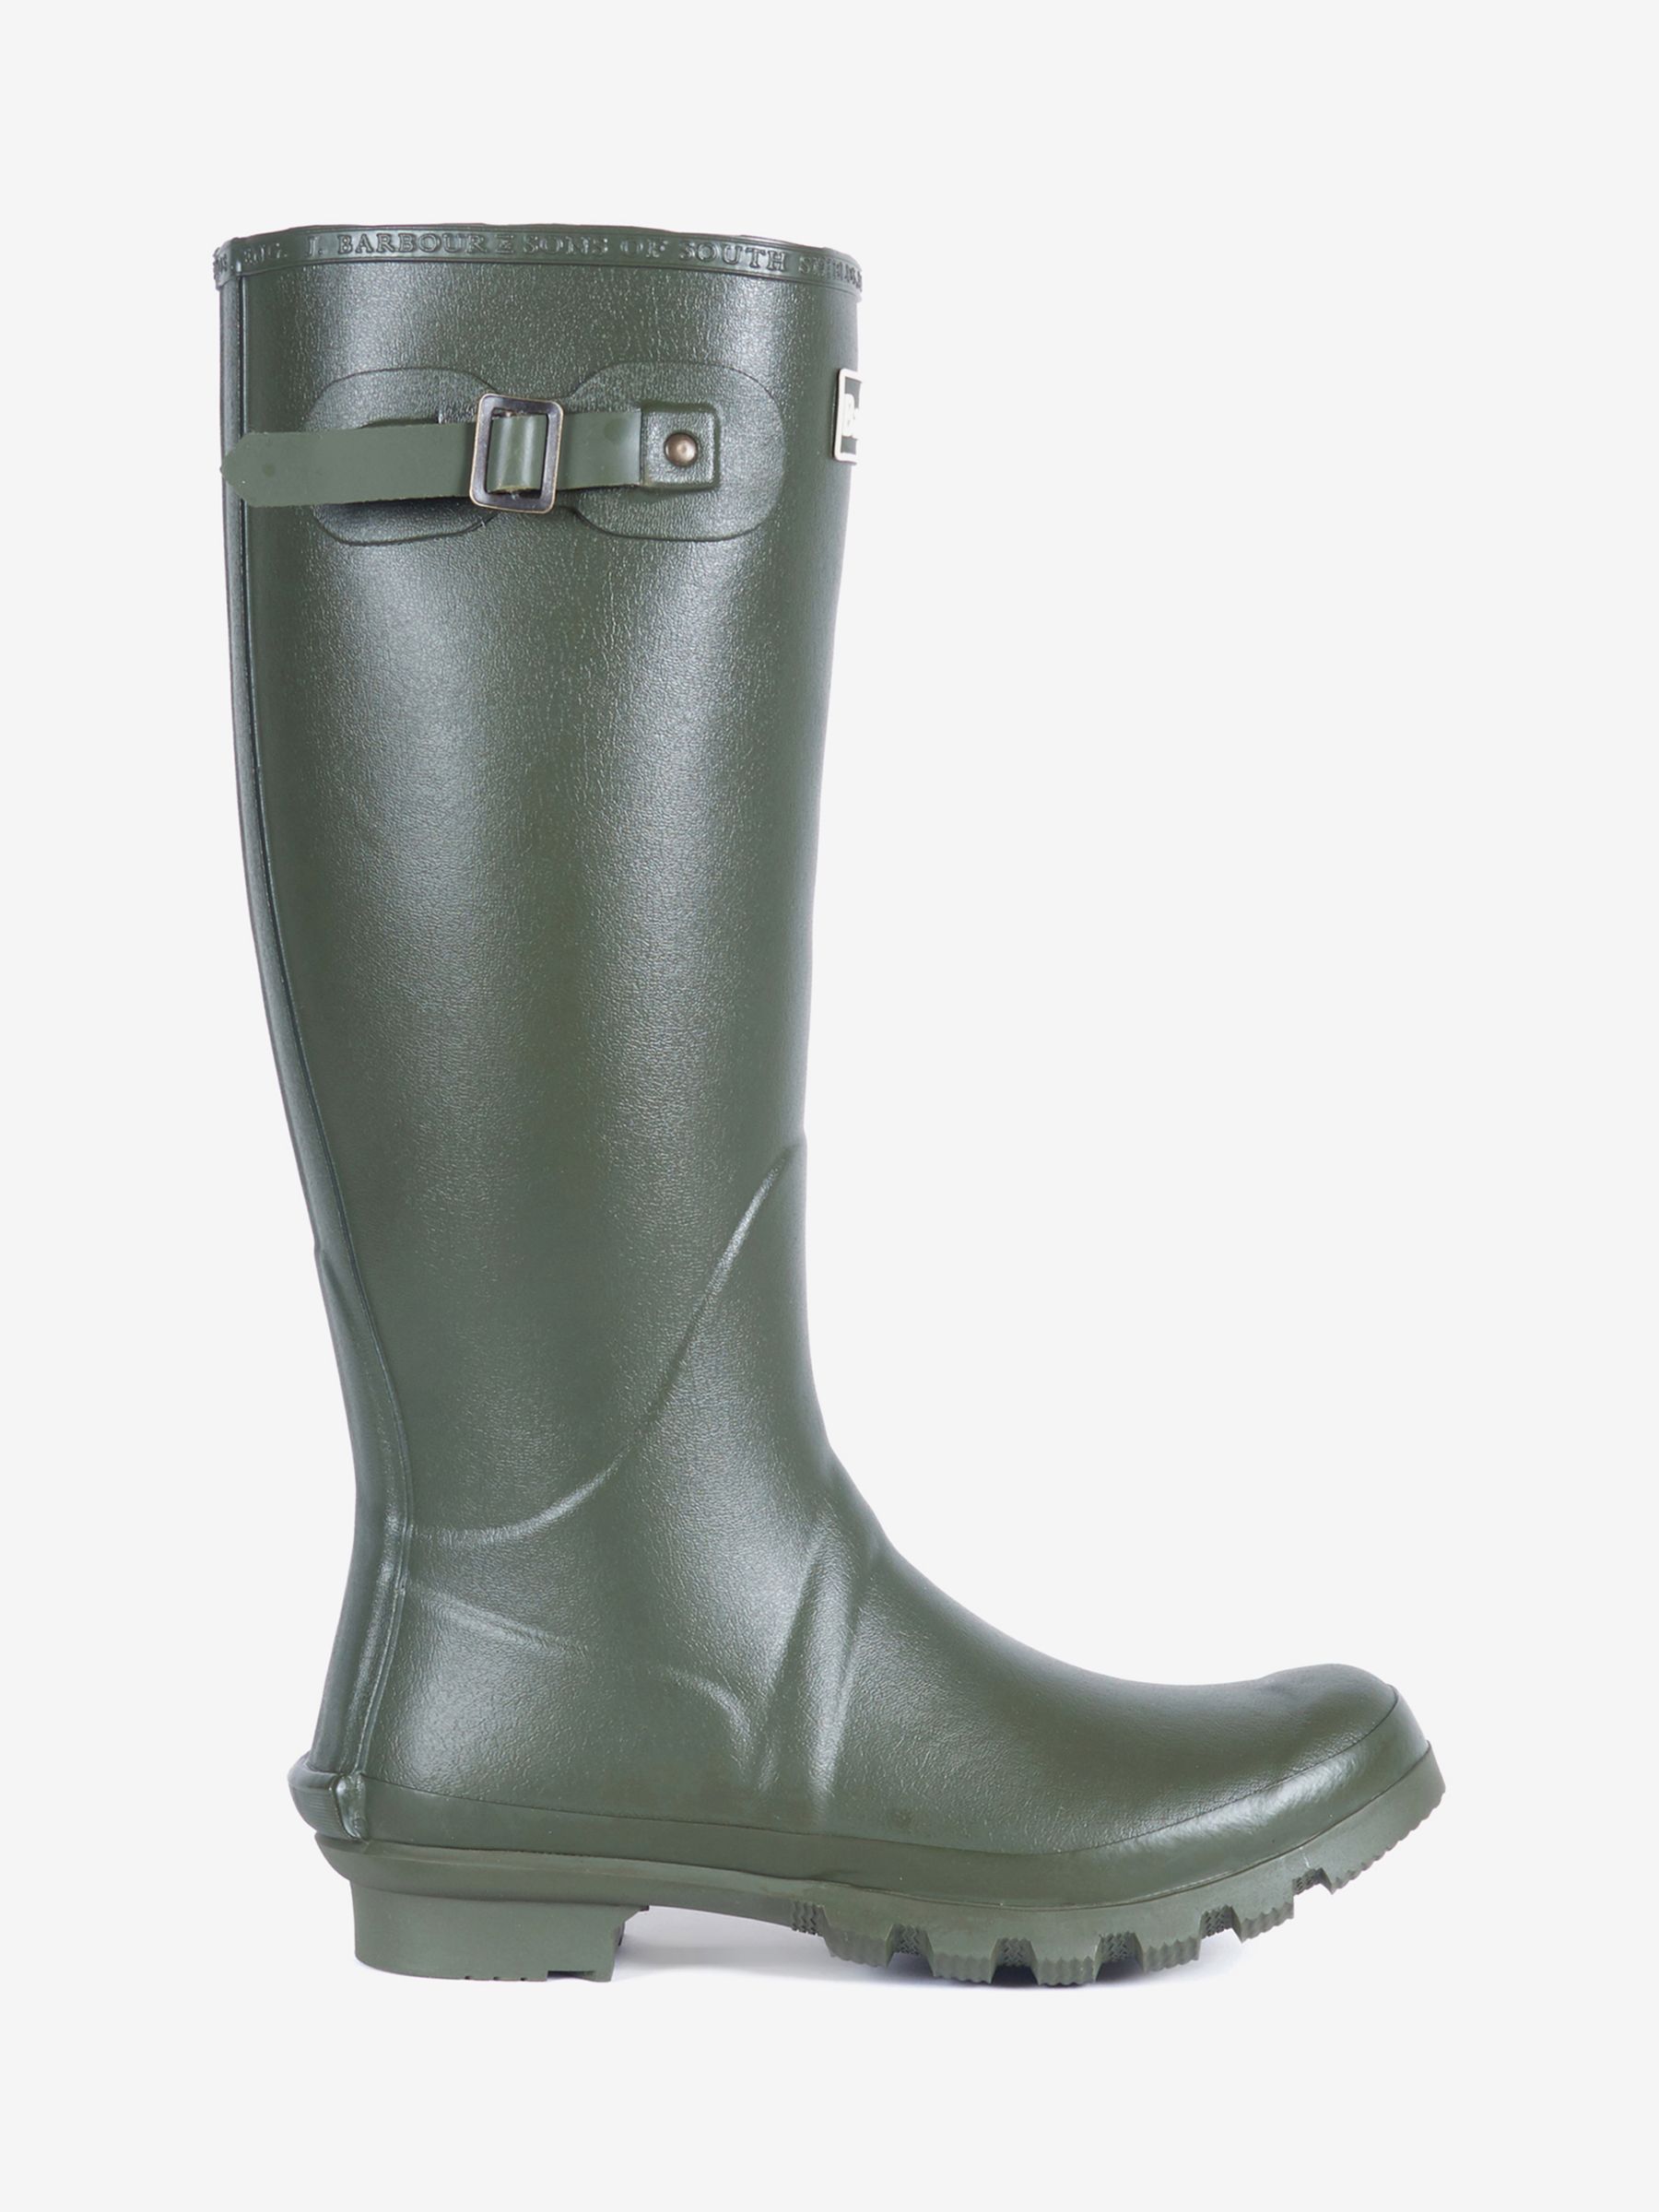 Barbour Bede Waterproof Wellington Boots, Olive at John Lewis & Partners